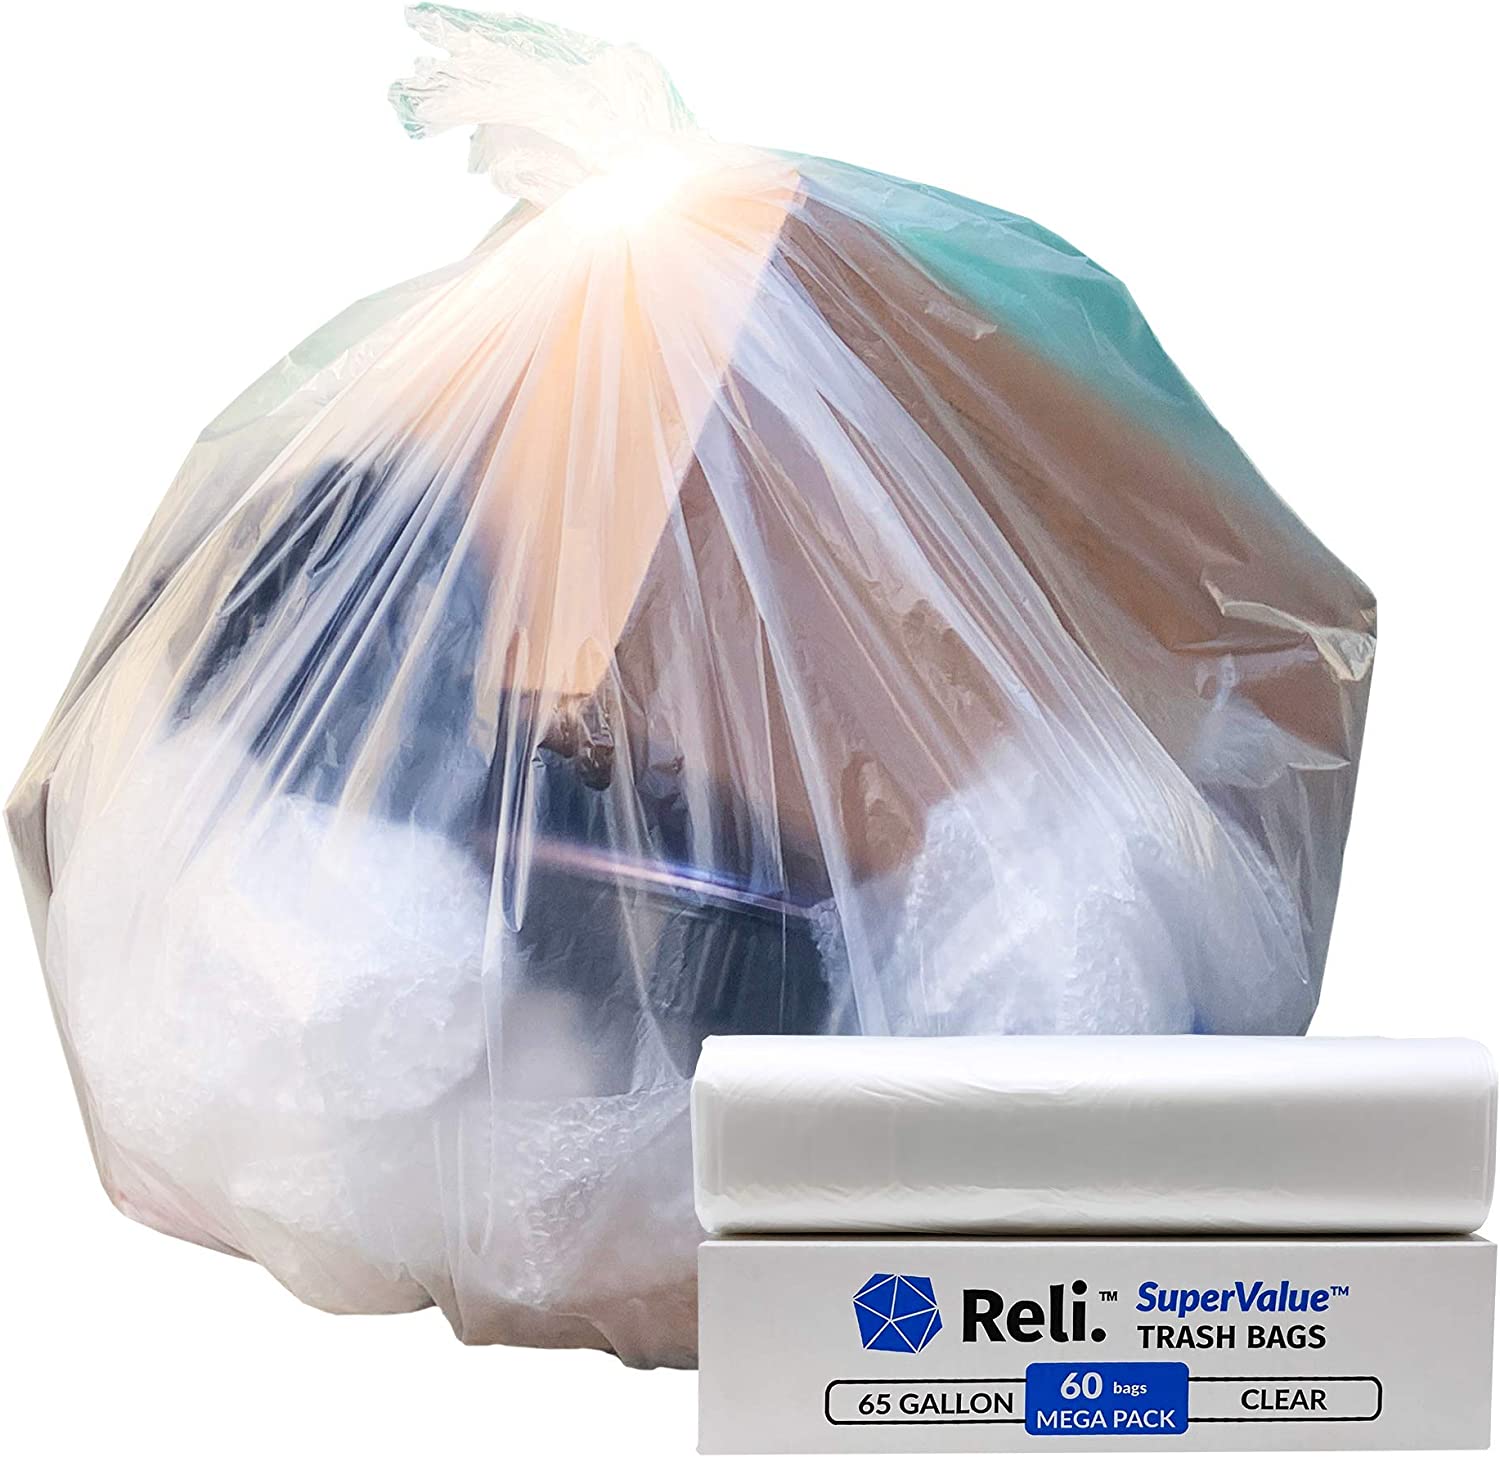 Reli. SuperValue 95 Gallon Trash Bags (68 Count, Bulk) Clear 95 Gallon  Garbage